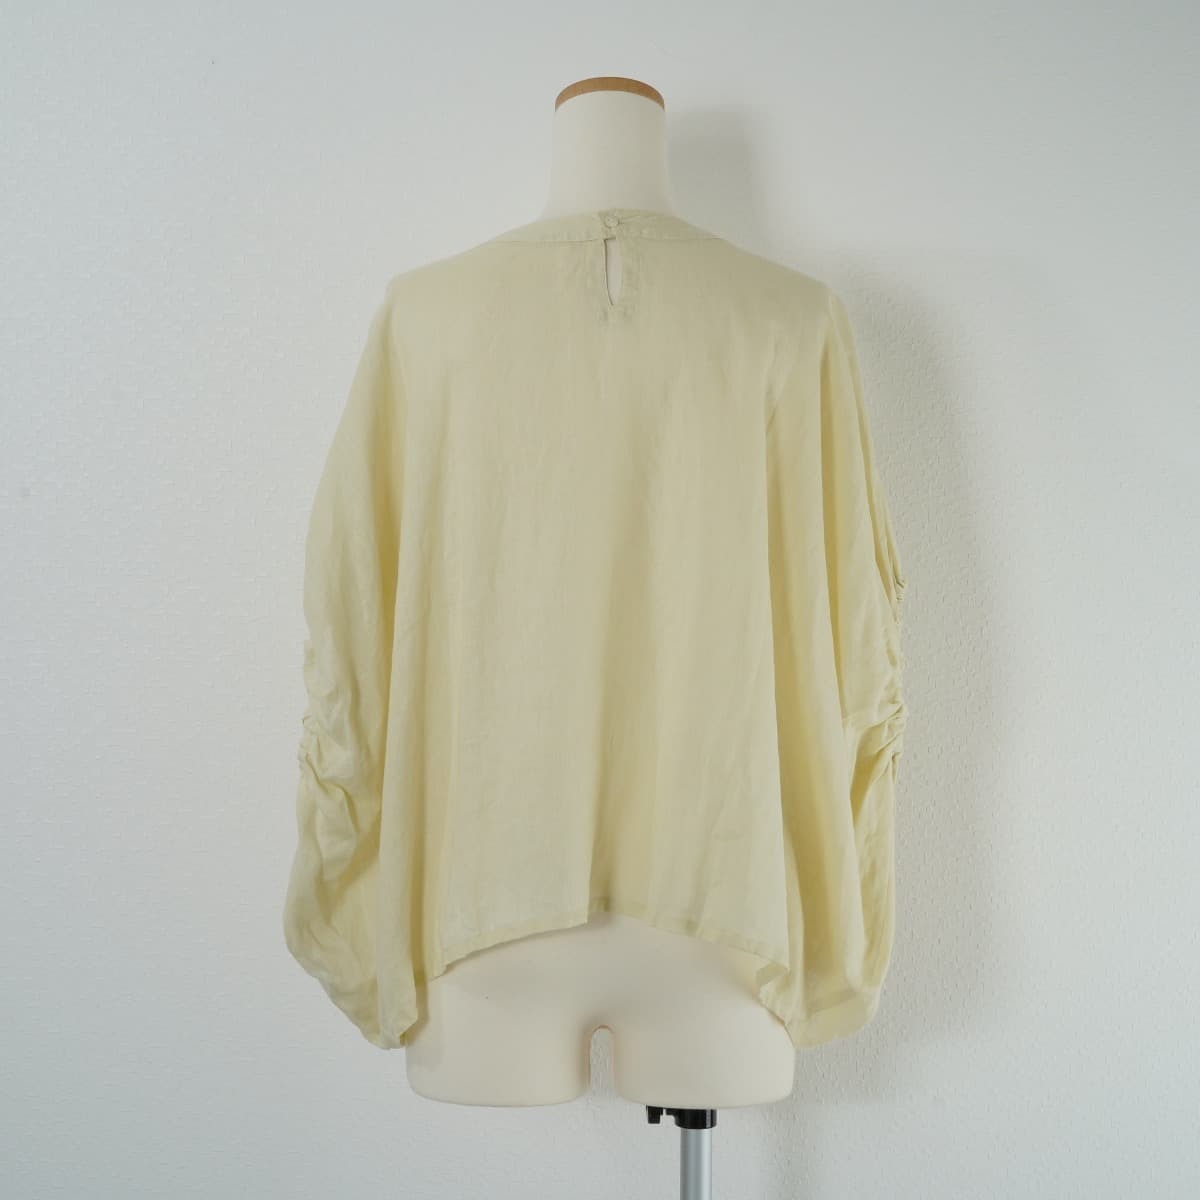 LOISIR lower z.-rulinen короткий рукав gya The - блуза tops cut and sewn пастель крем желтый 